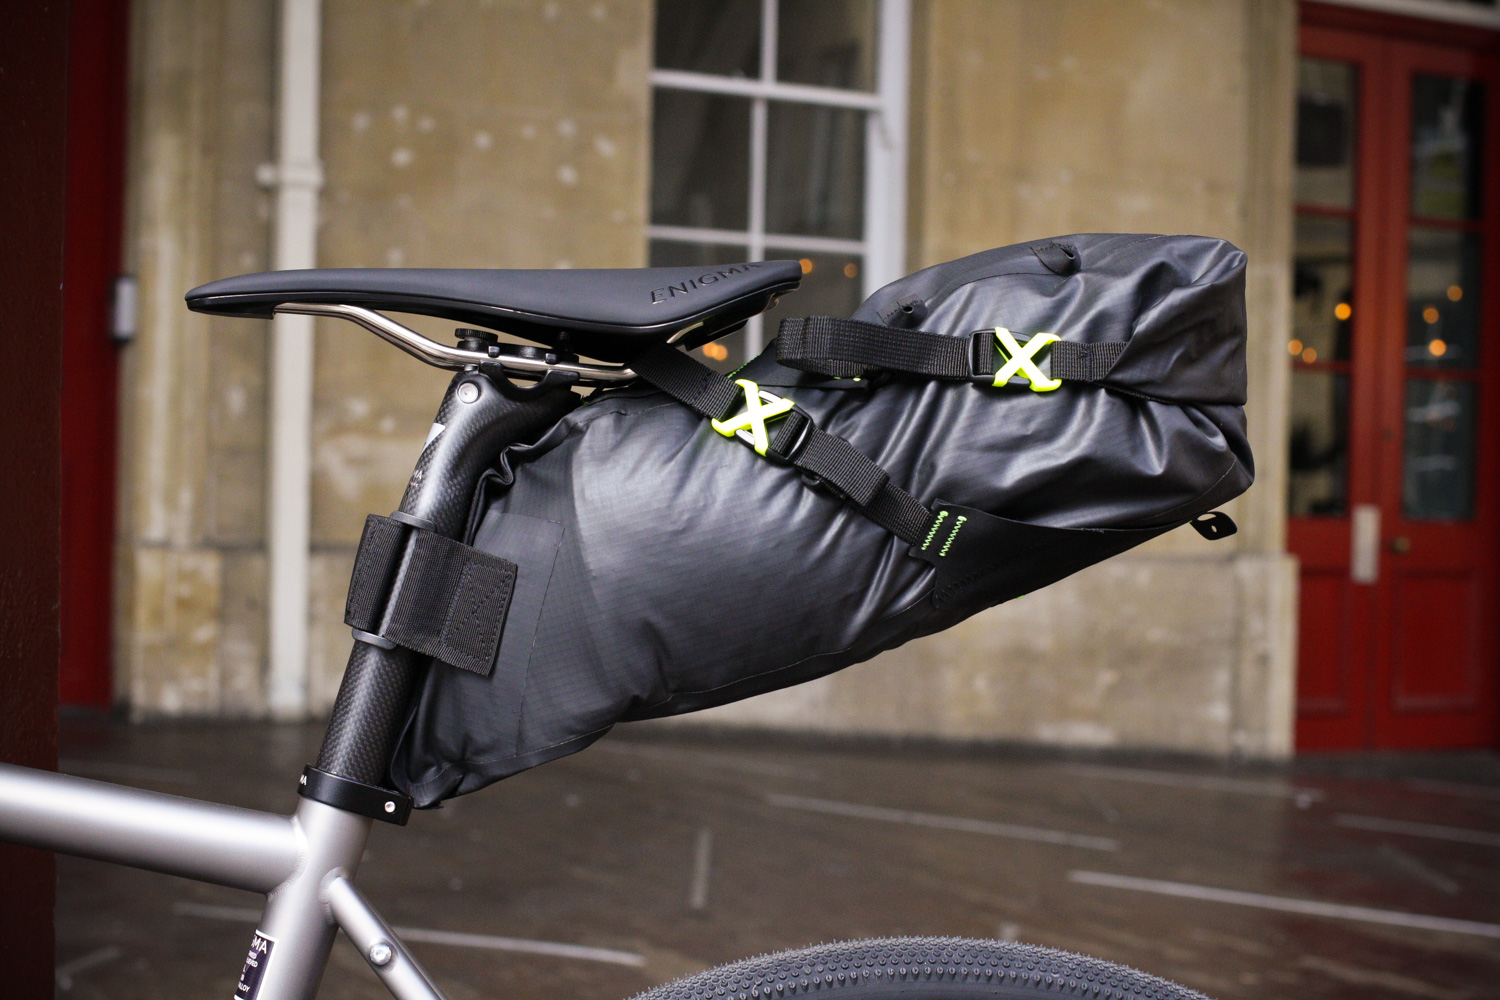 Altura Vortex Waterproof Compact Saddle Bag